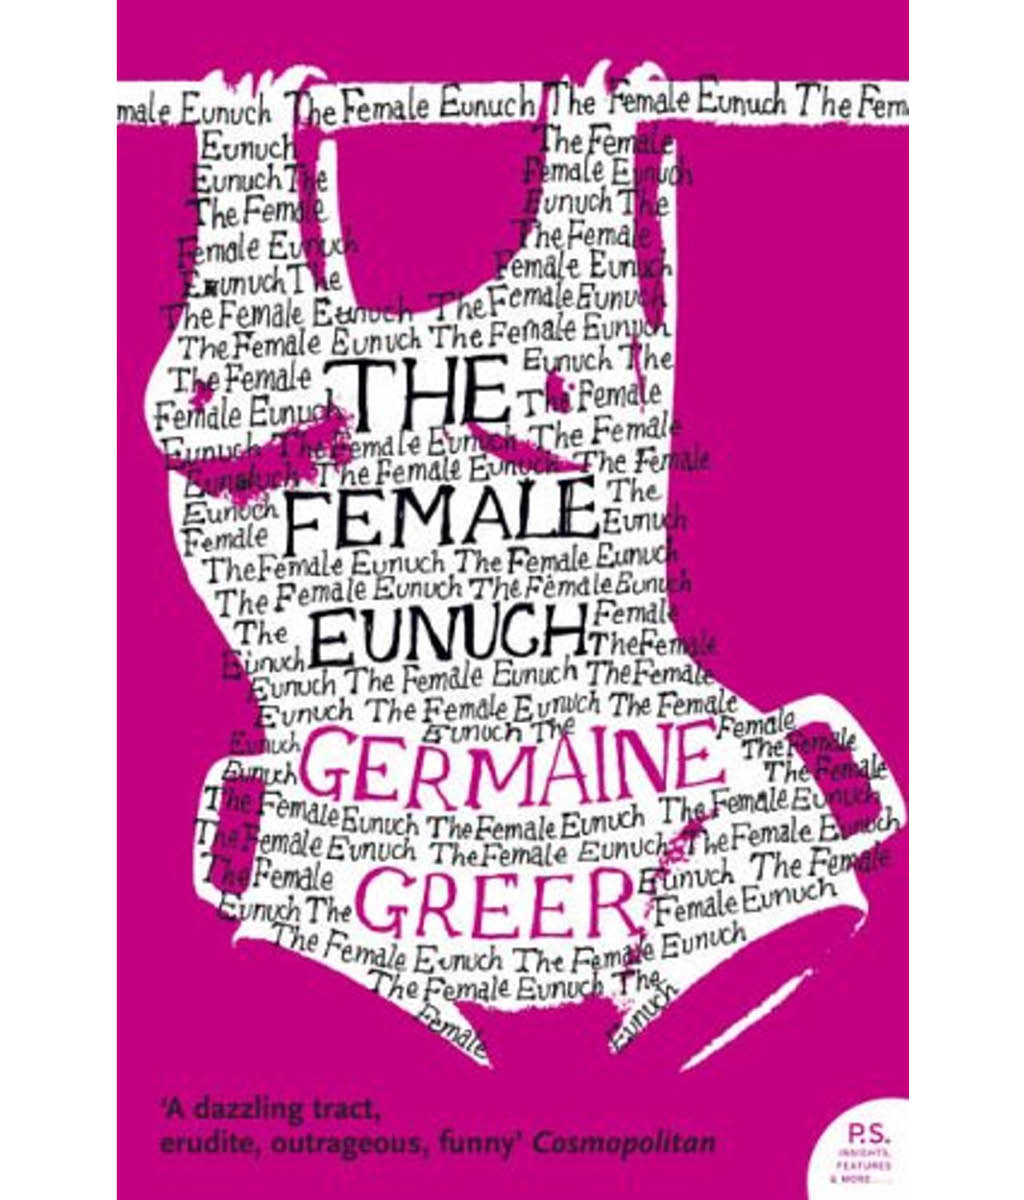 The female eunuch by Germaine Greer